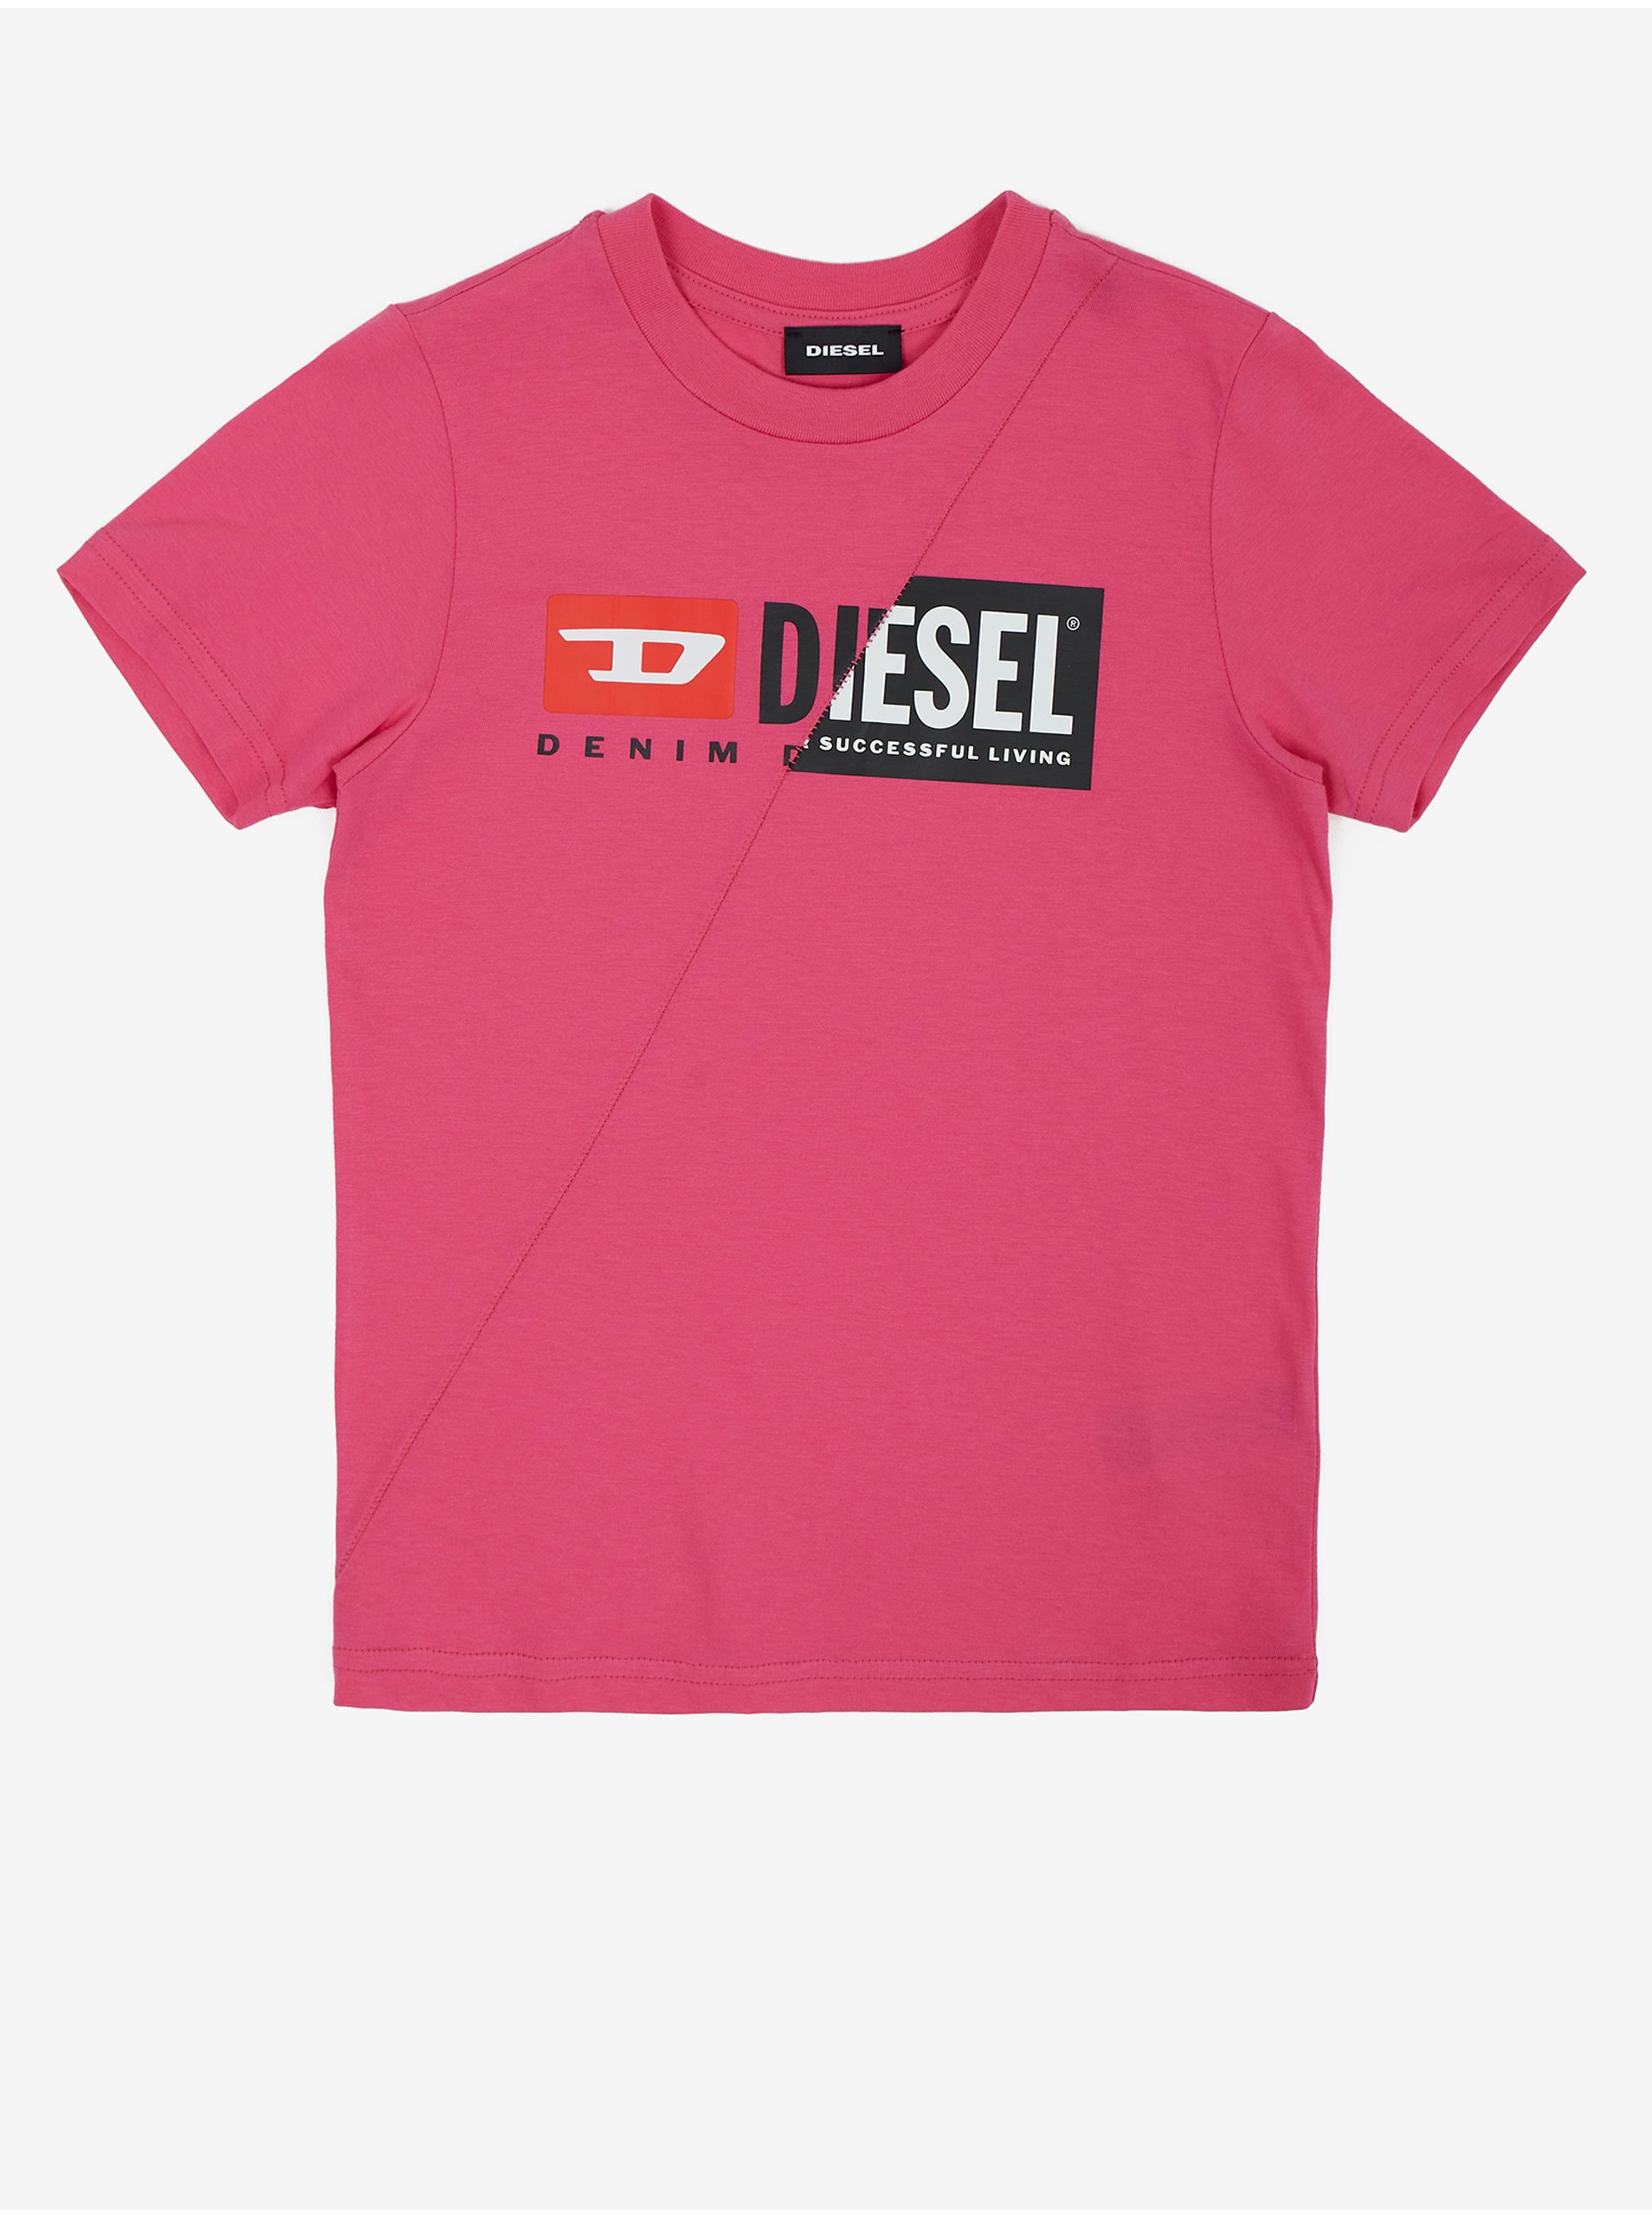 Lacno Diesel - ružová